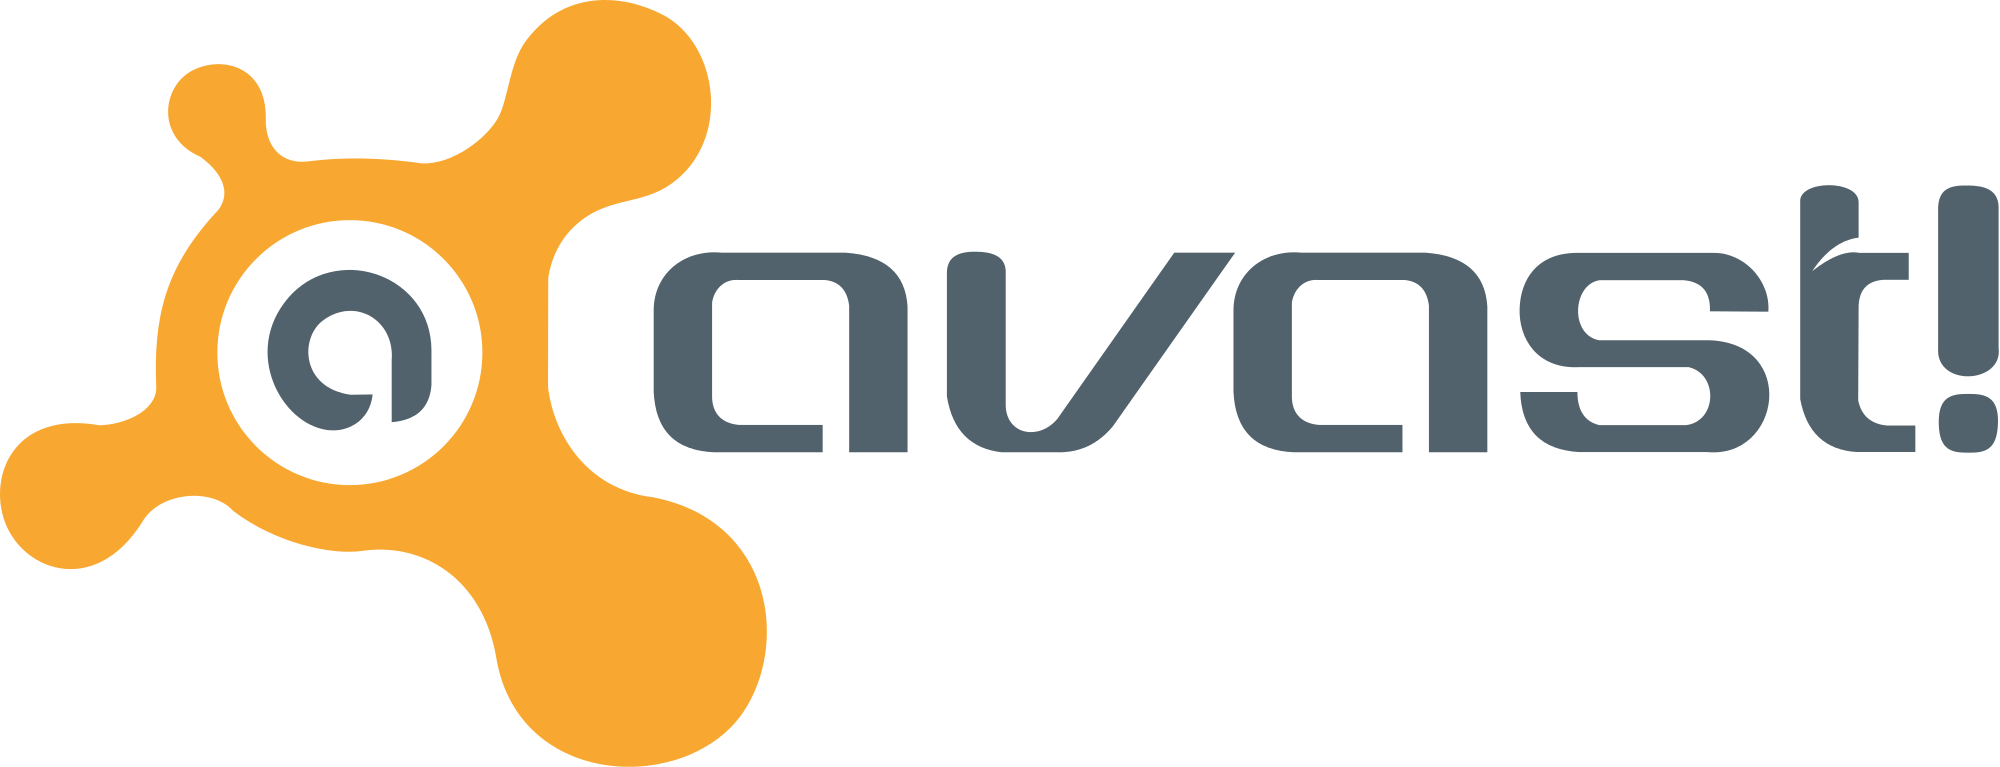 Avast Logo PNG-PlusPNG.com-66